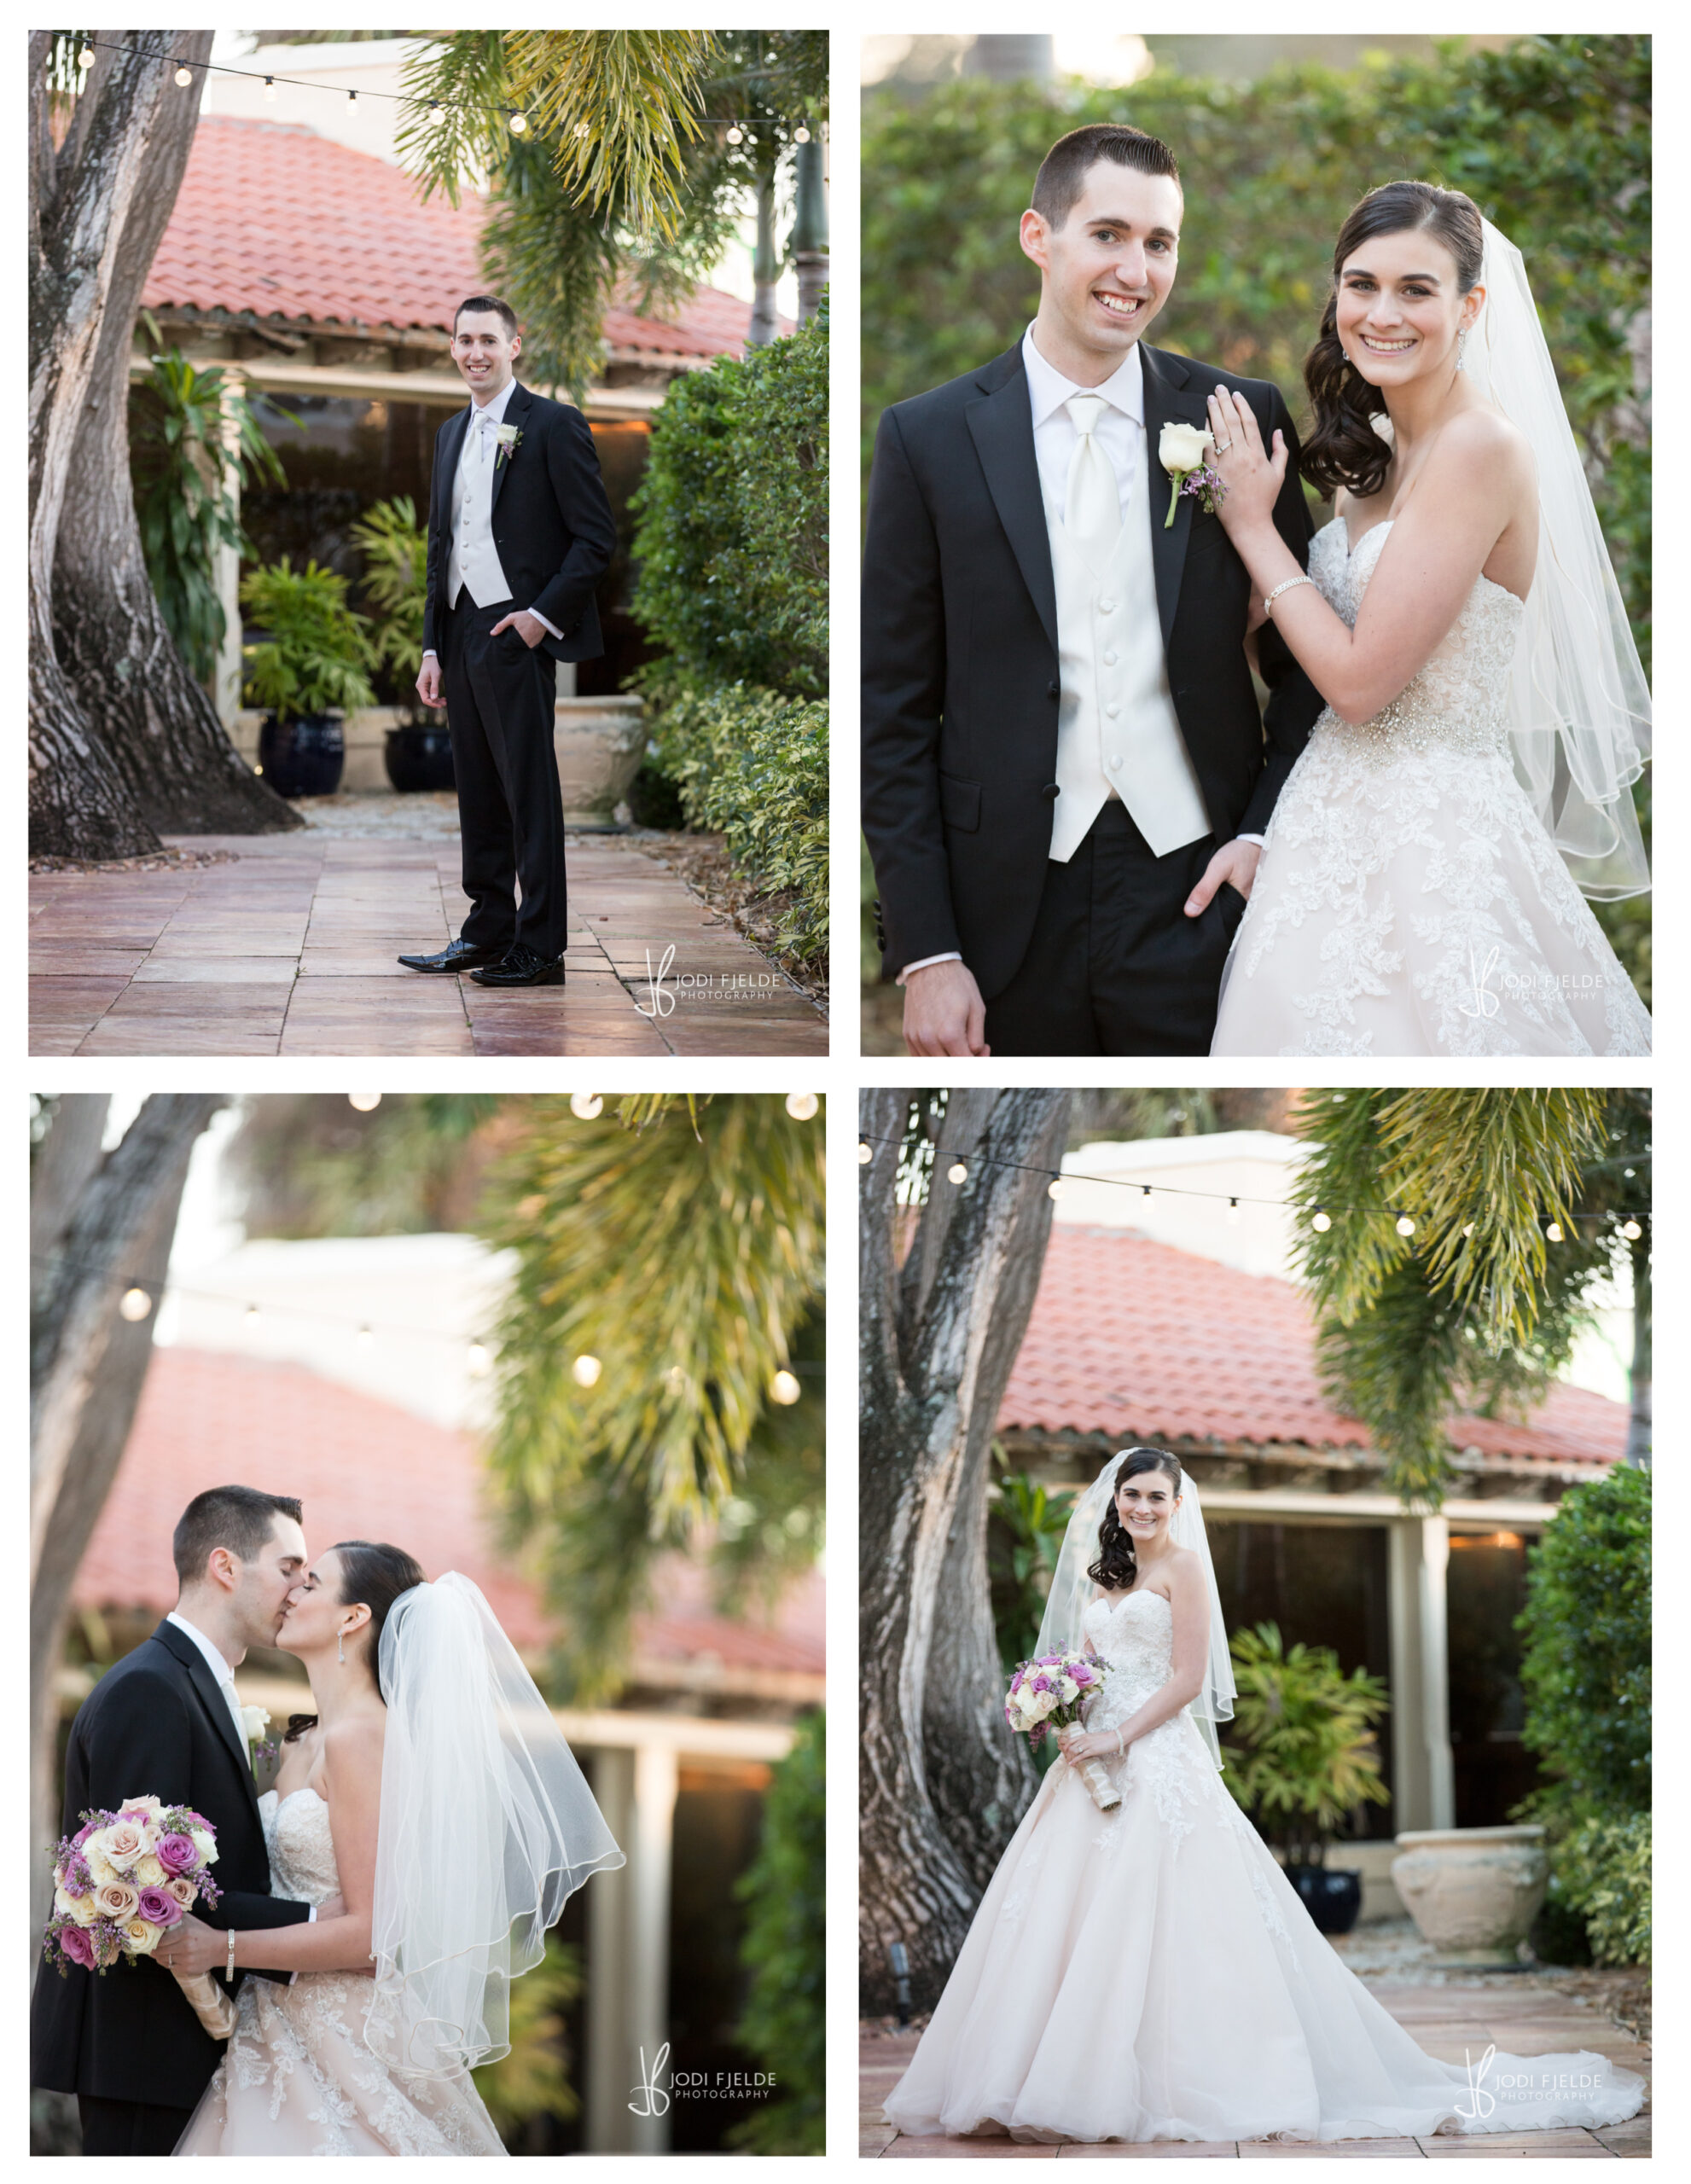 Benvenuto_Palm_Beach_Wedding_Jewish_Michelle & Jason_Jodi_Fjedle_Photography 32.jpg